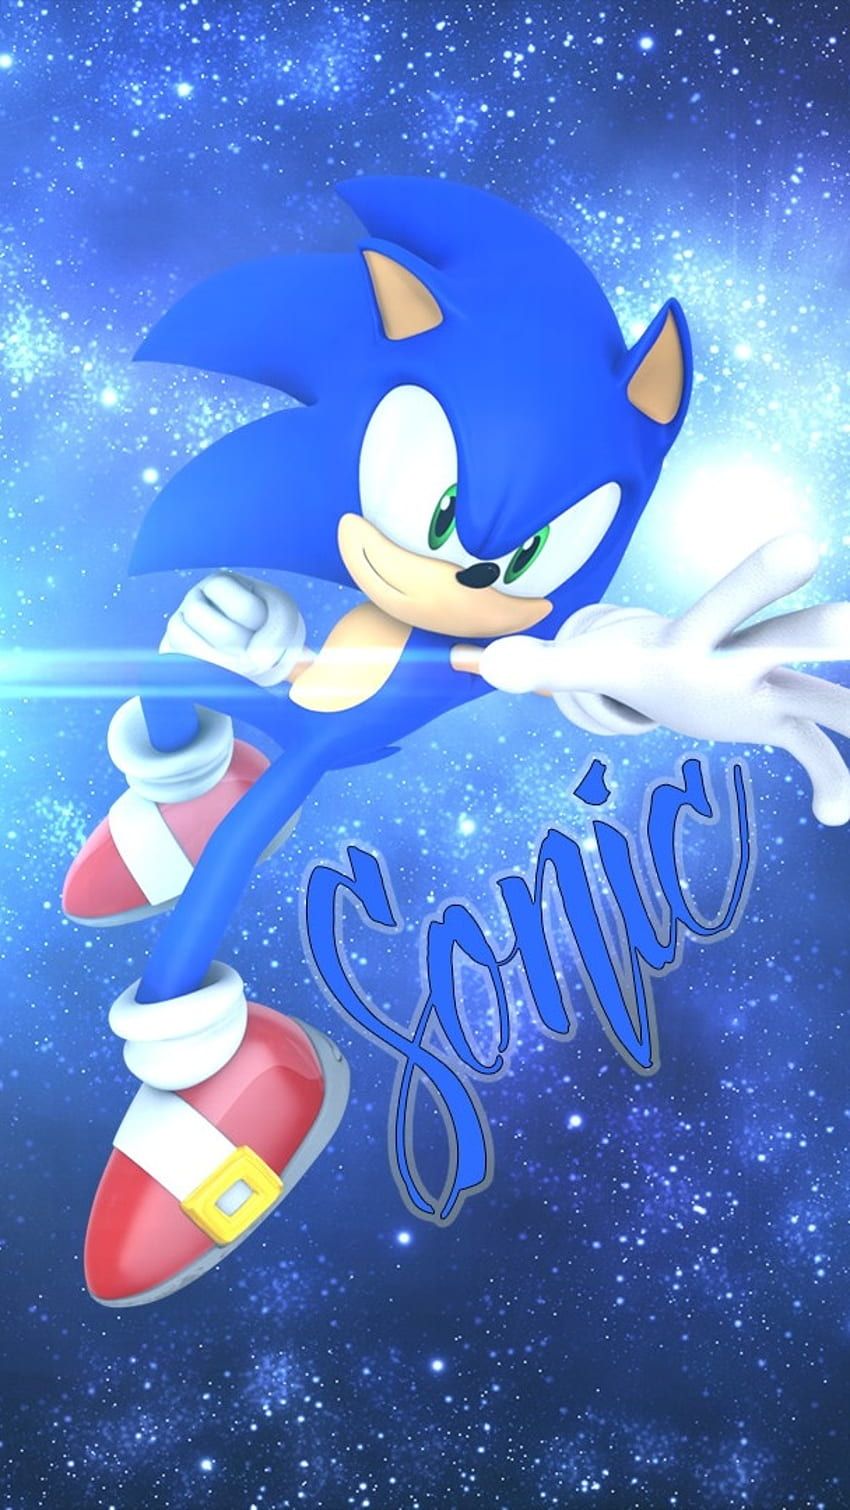 Iphone wallpaper sonic the hedgehog - Sonic